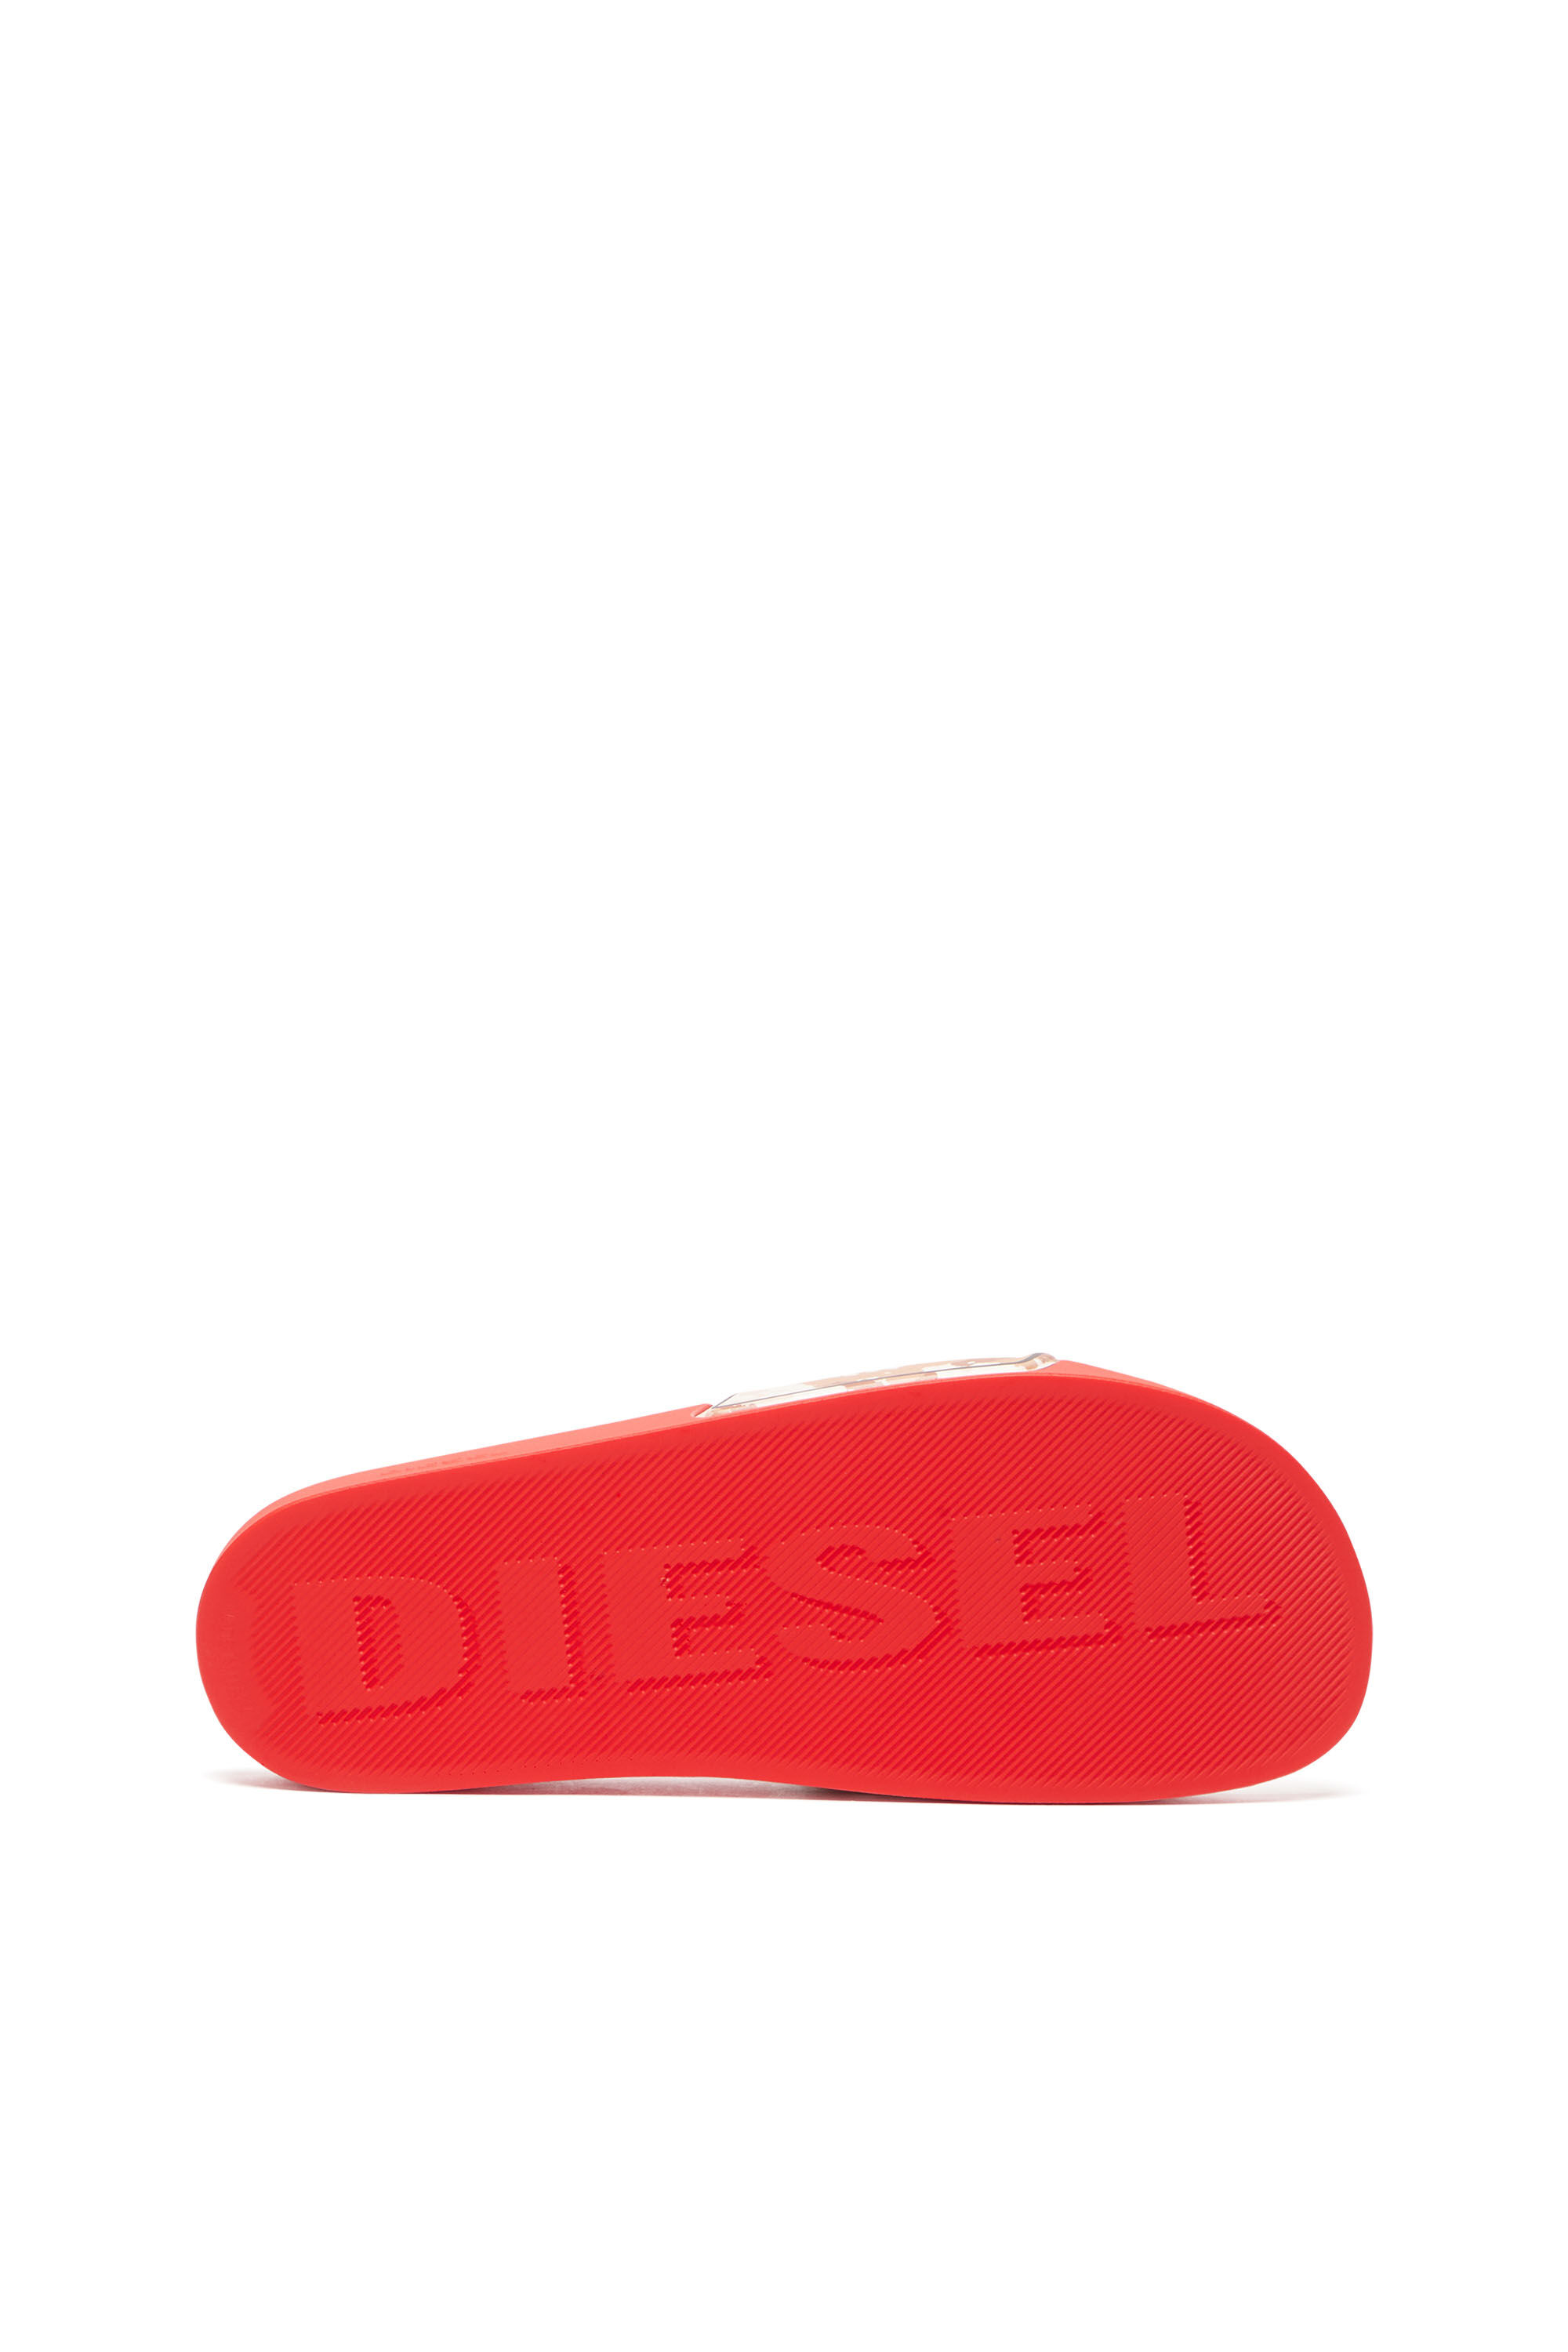 Diesel - SA-MAYEMI CC X, Mixte Sa-Mayemi CC X - Claquettes de piscine avec bande camouflage in Rouge - Image 5